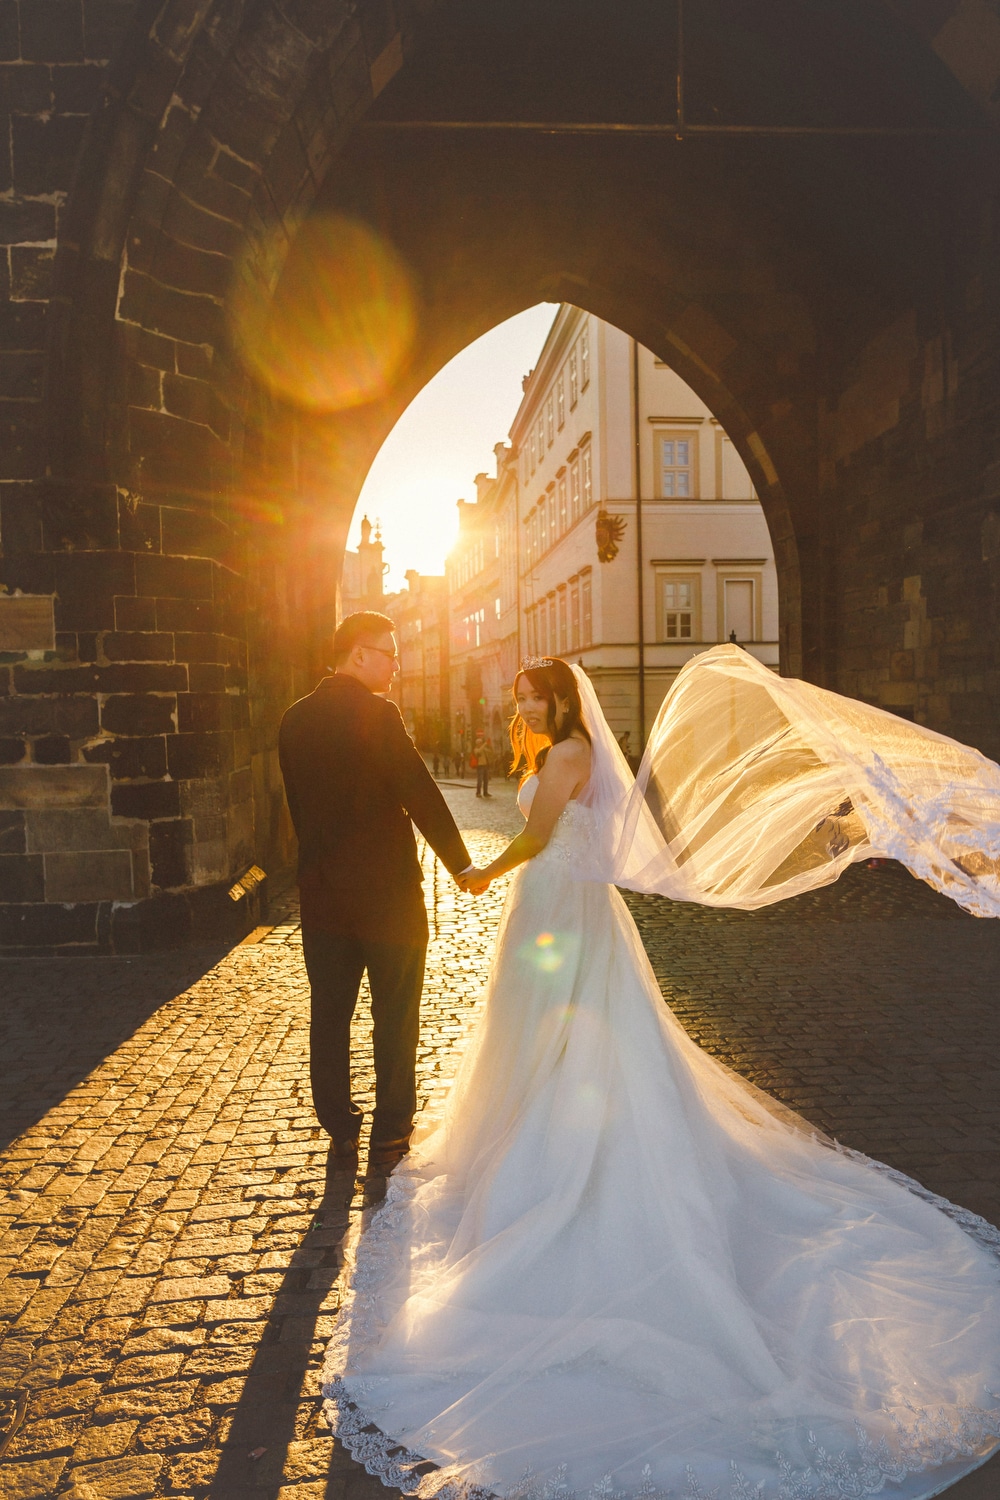 Prague, Charles Bridge, couple portrait, wedding dress, sun flare, Powder Tower